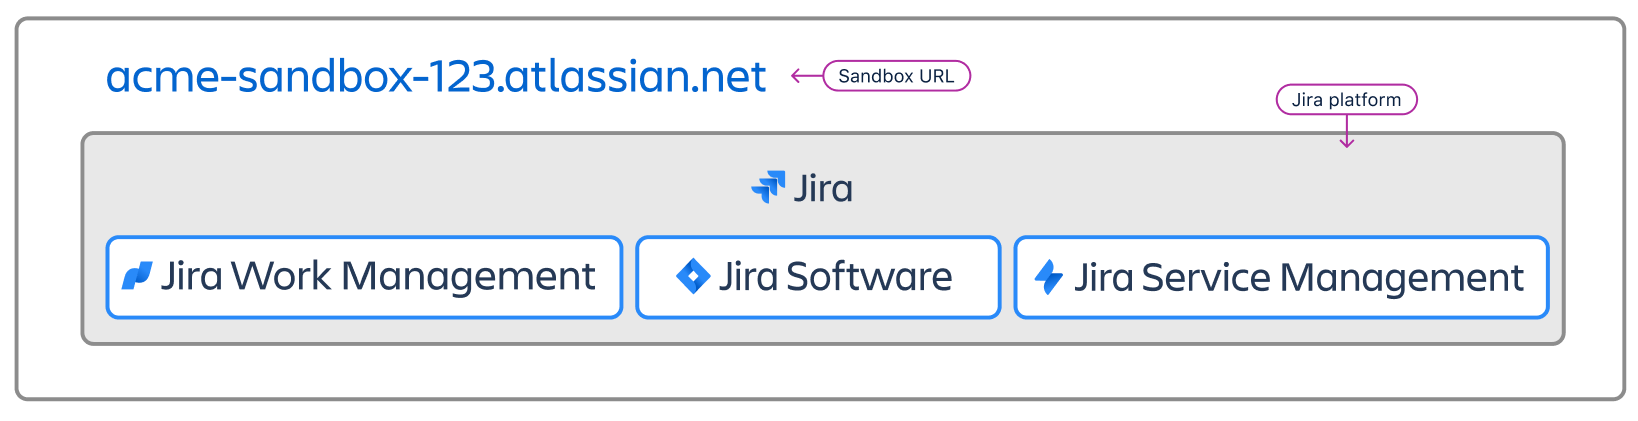 Jira products inside a Jira box with the same sandbox URL